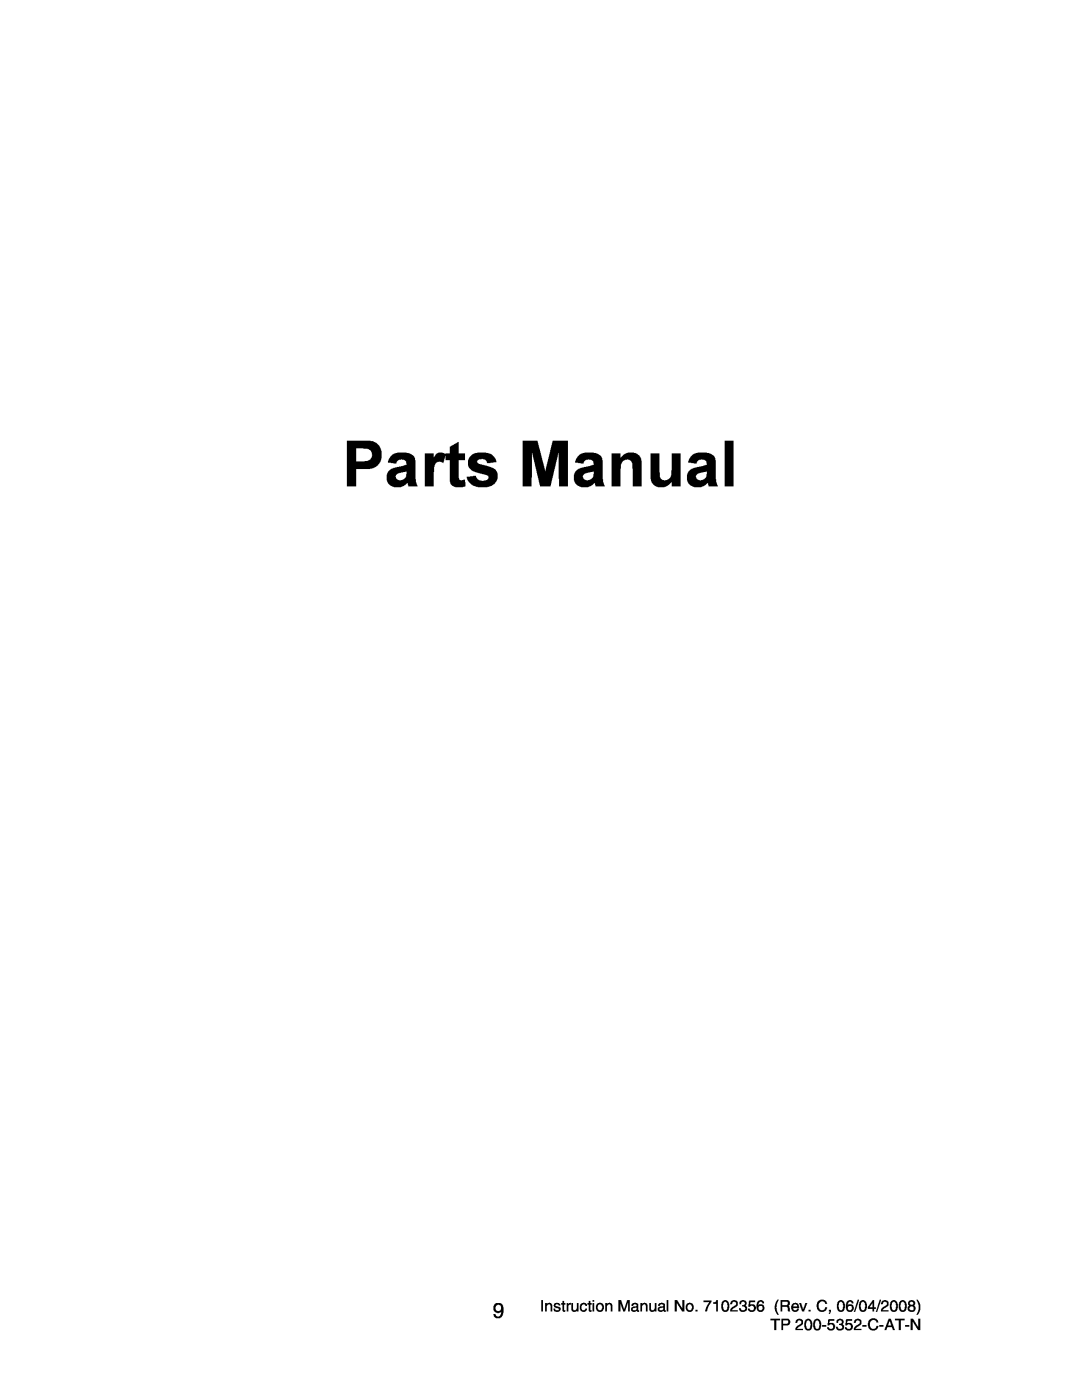 Snapper 7600069 - 7600070 instruction manual Parts Manual 